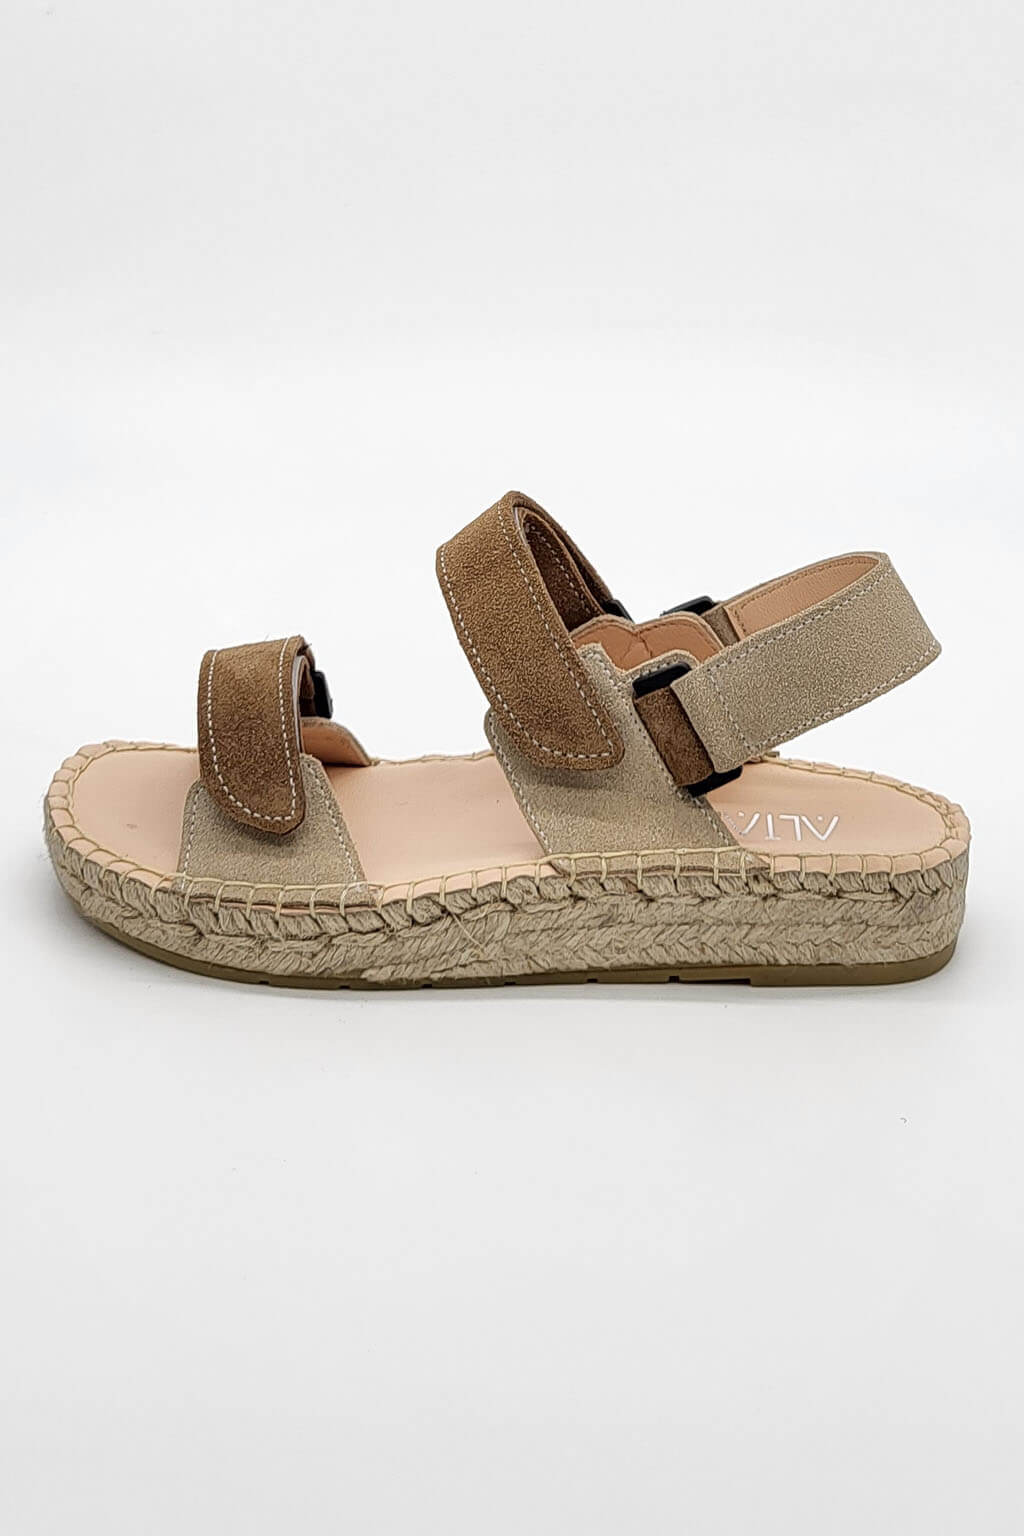 marcella-brown-mpez-altana-leather-dad-espandrille-sandals-2